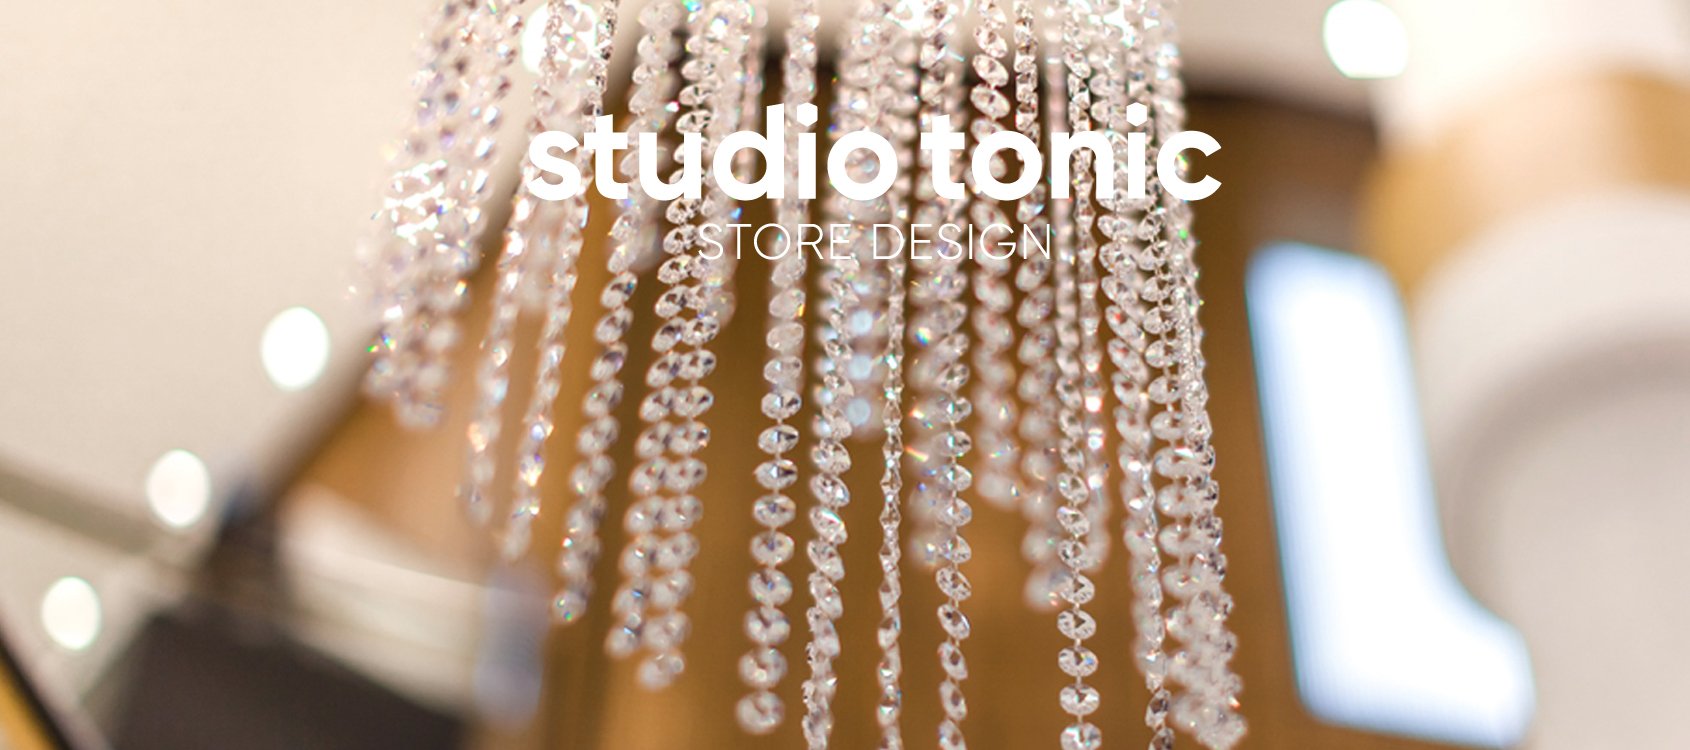 Independent company Studio Tonic Store Design